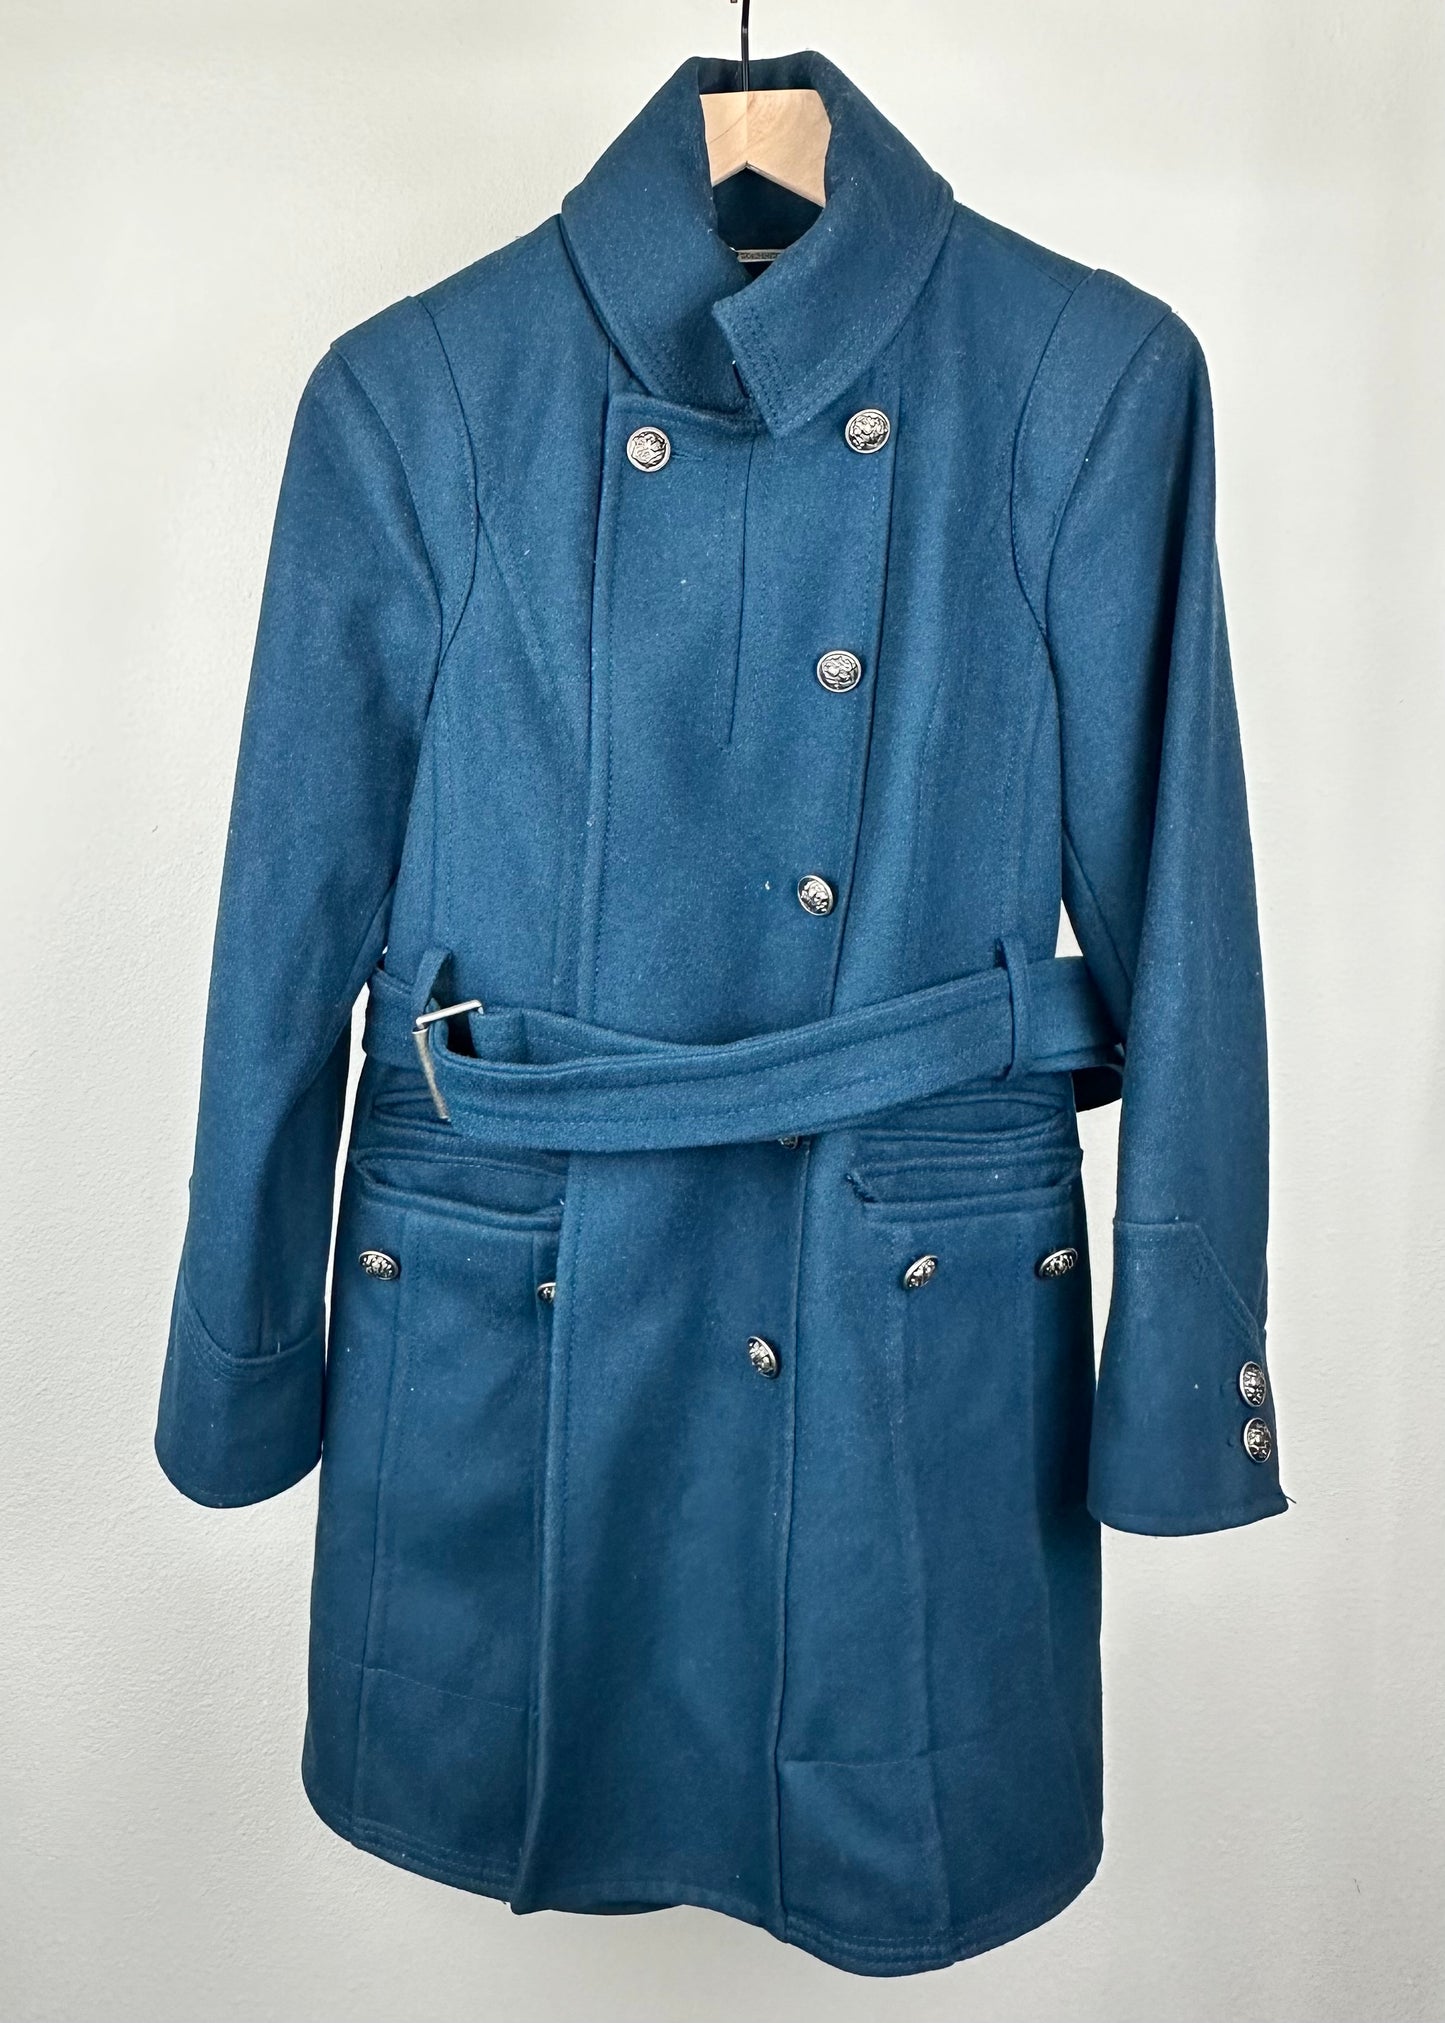 Women's Blue Coat by Worthington